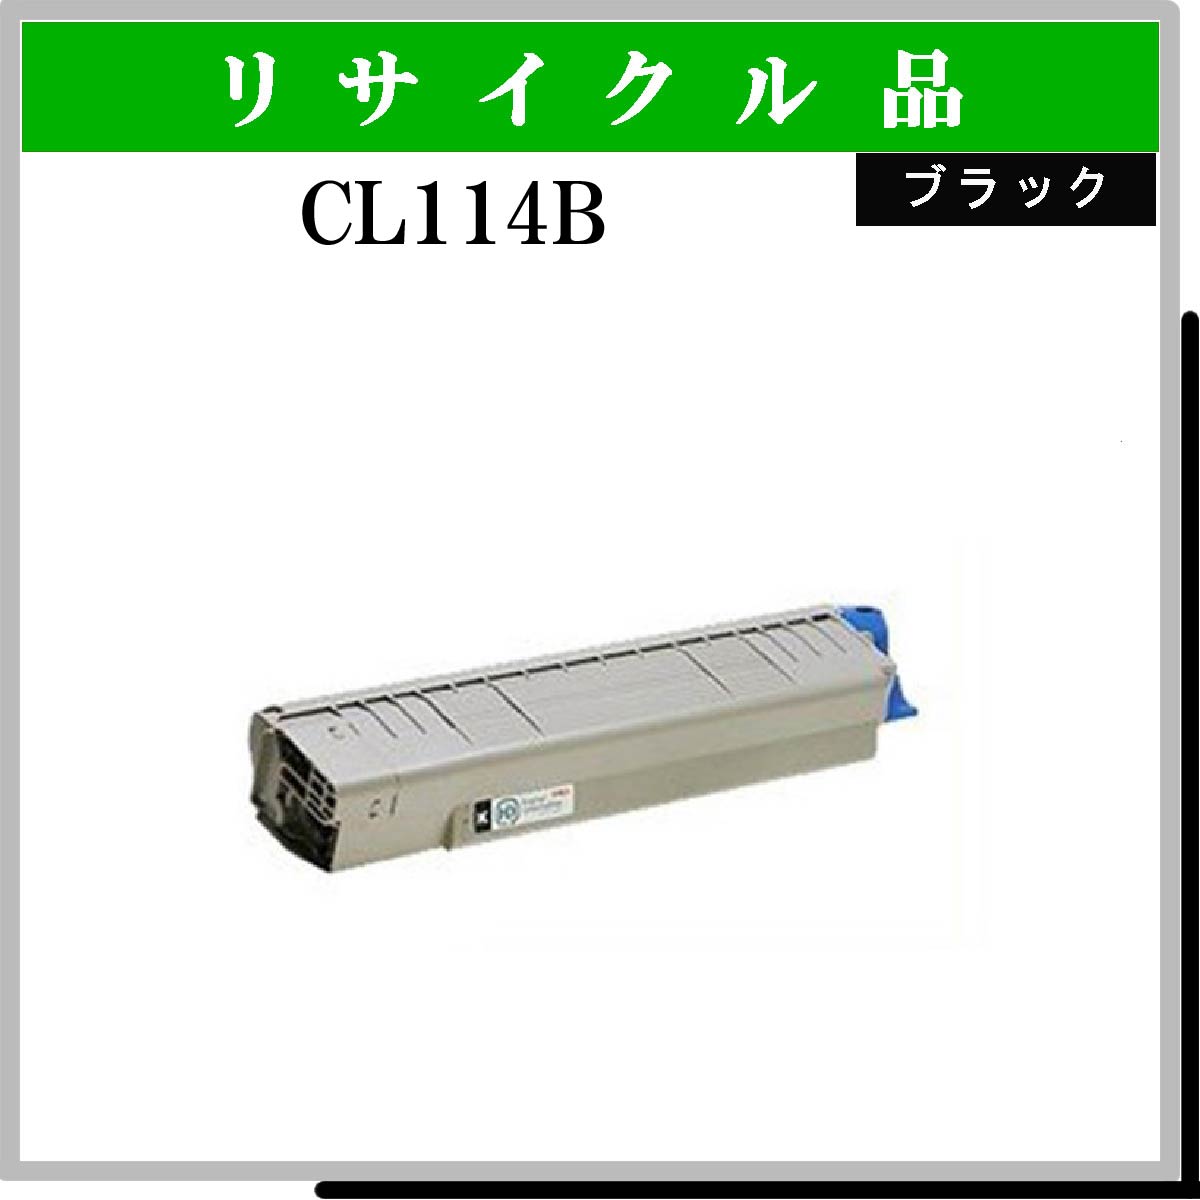 CL114B ﾌﾞﾗｯｸ - ウインドウを閉じる